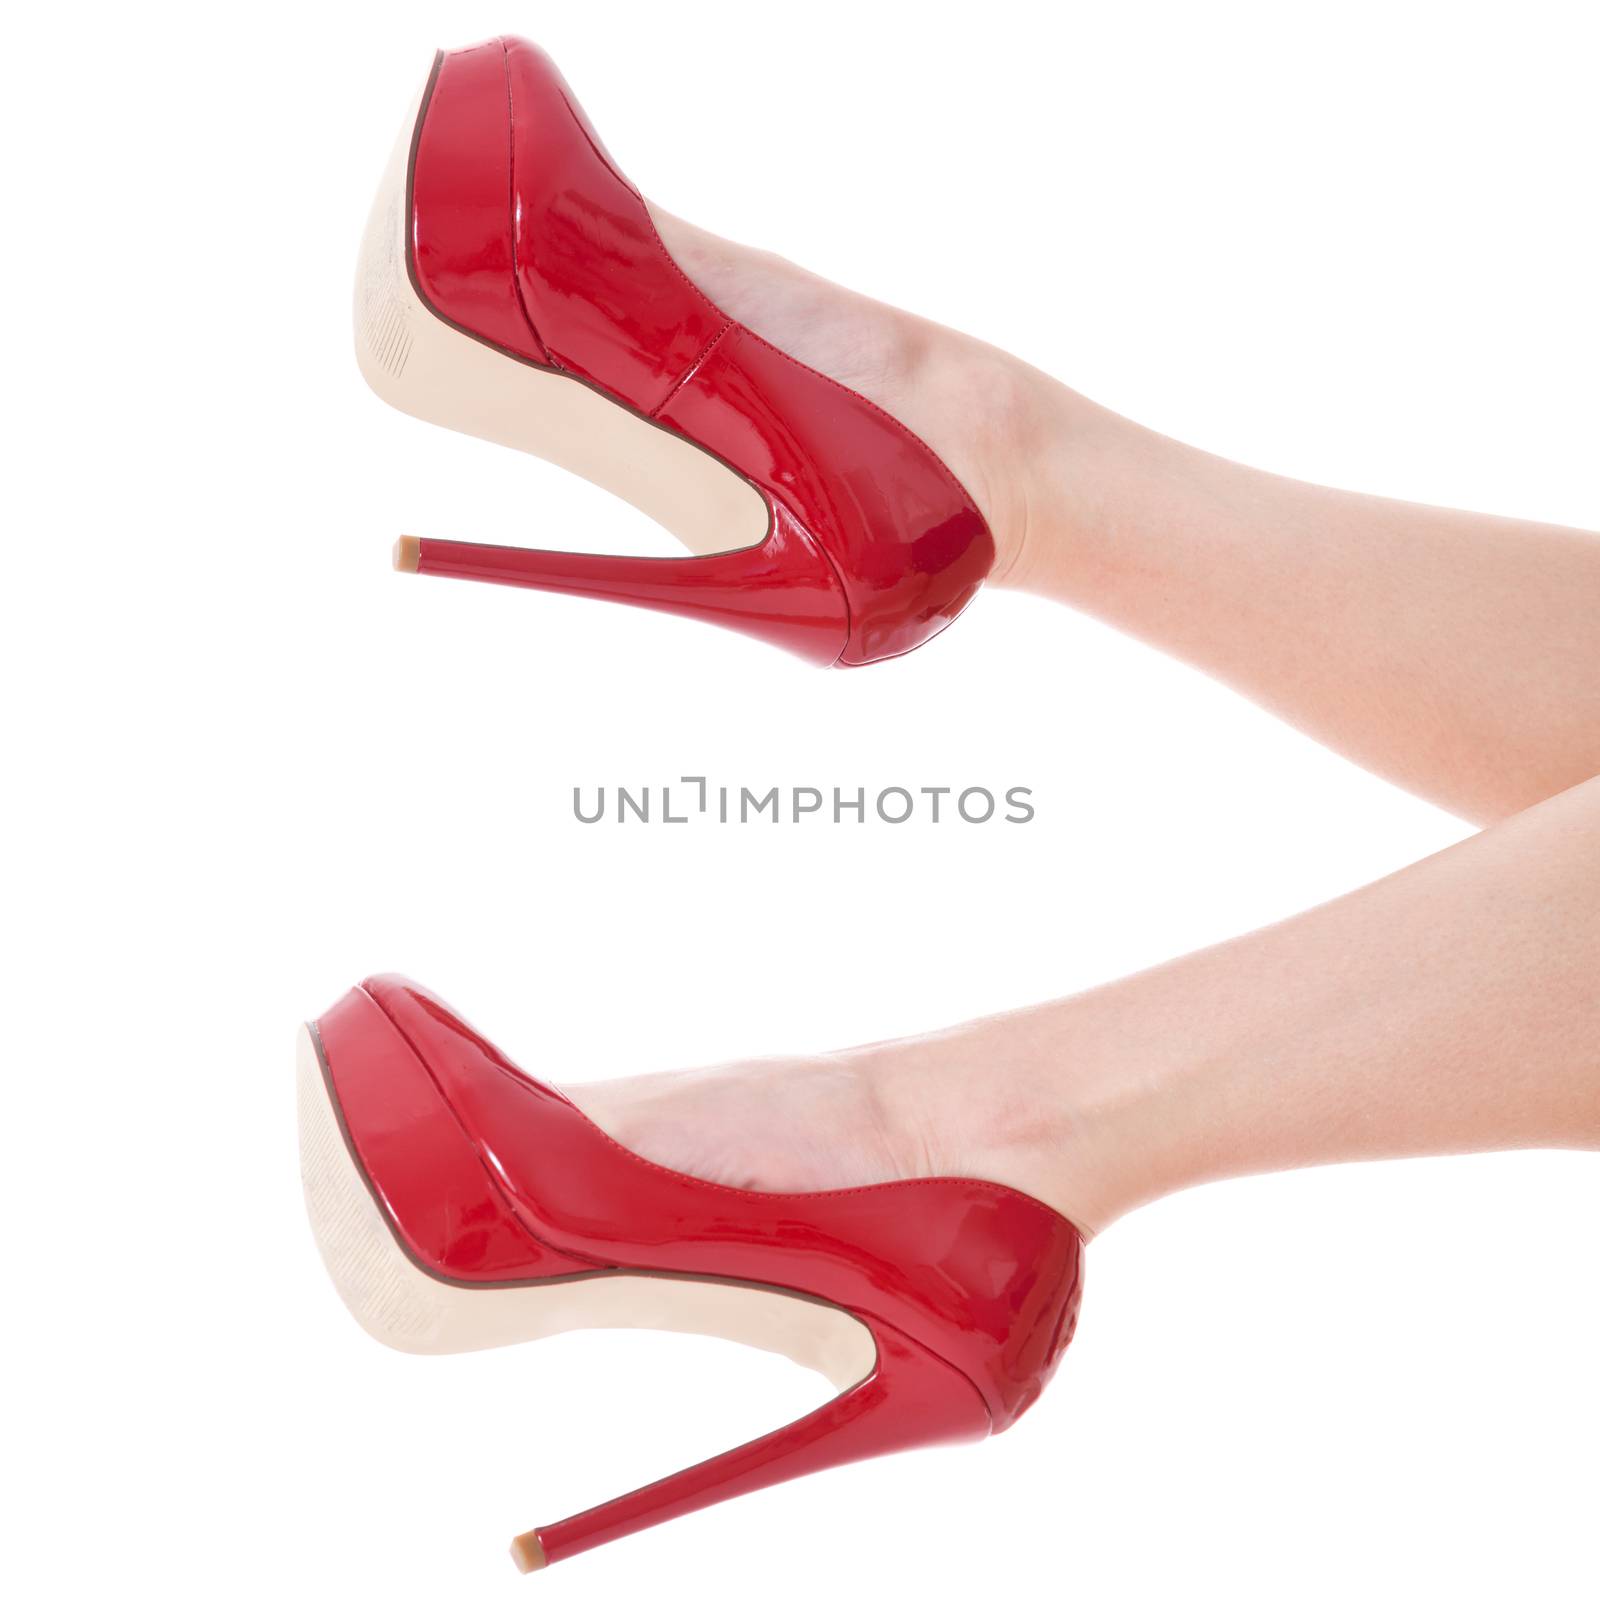 Sexy bare female legs in elegant red stilettos by juniart